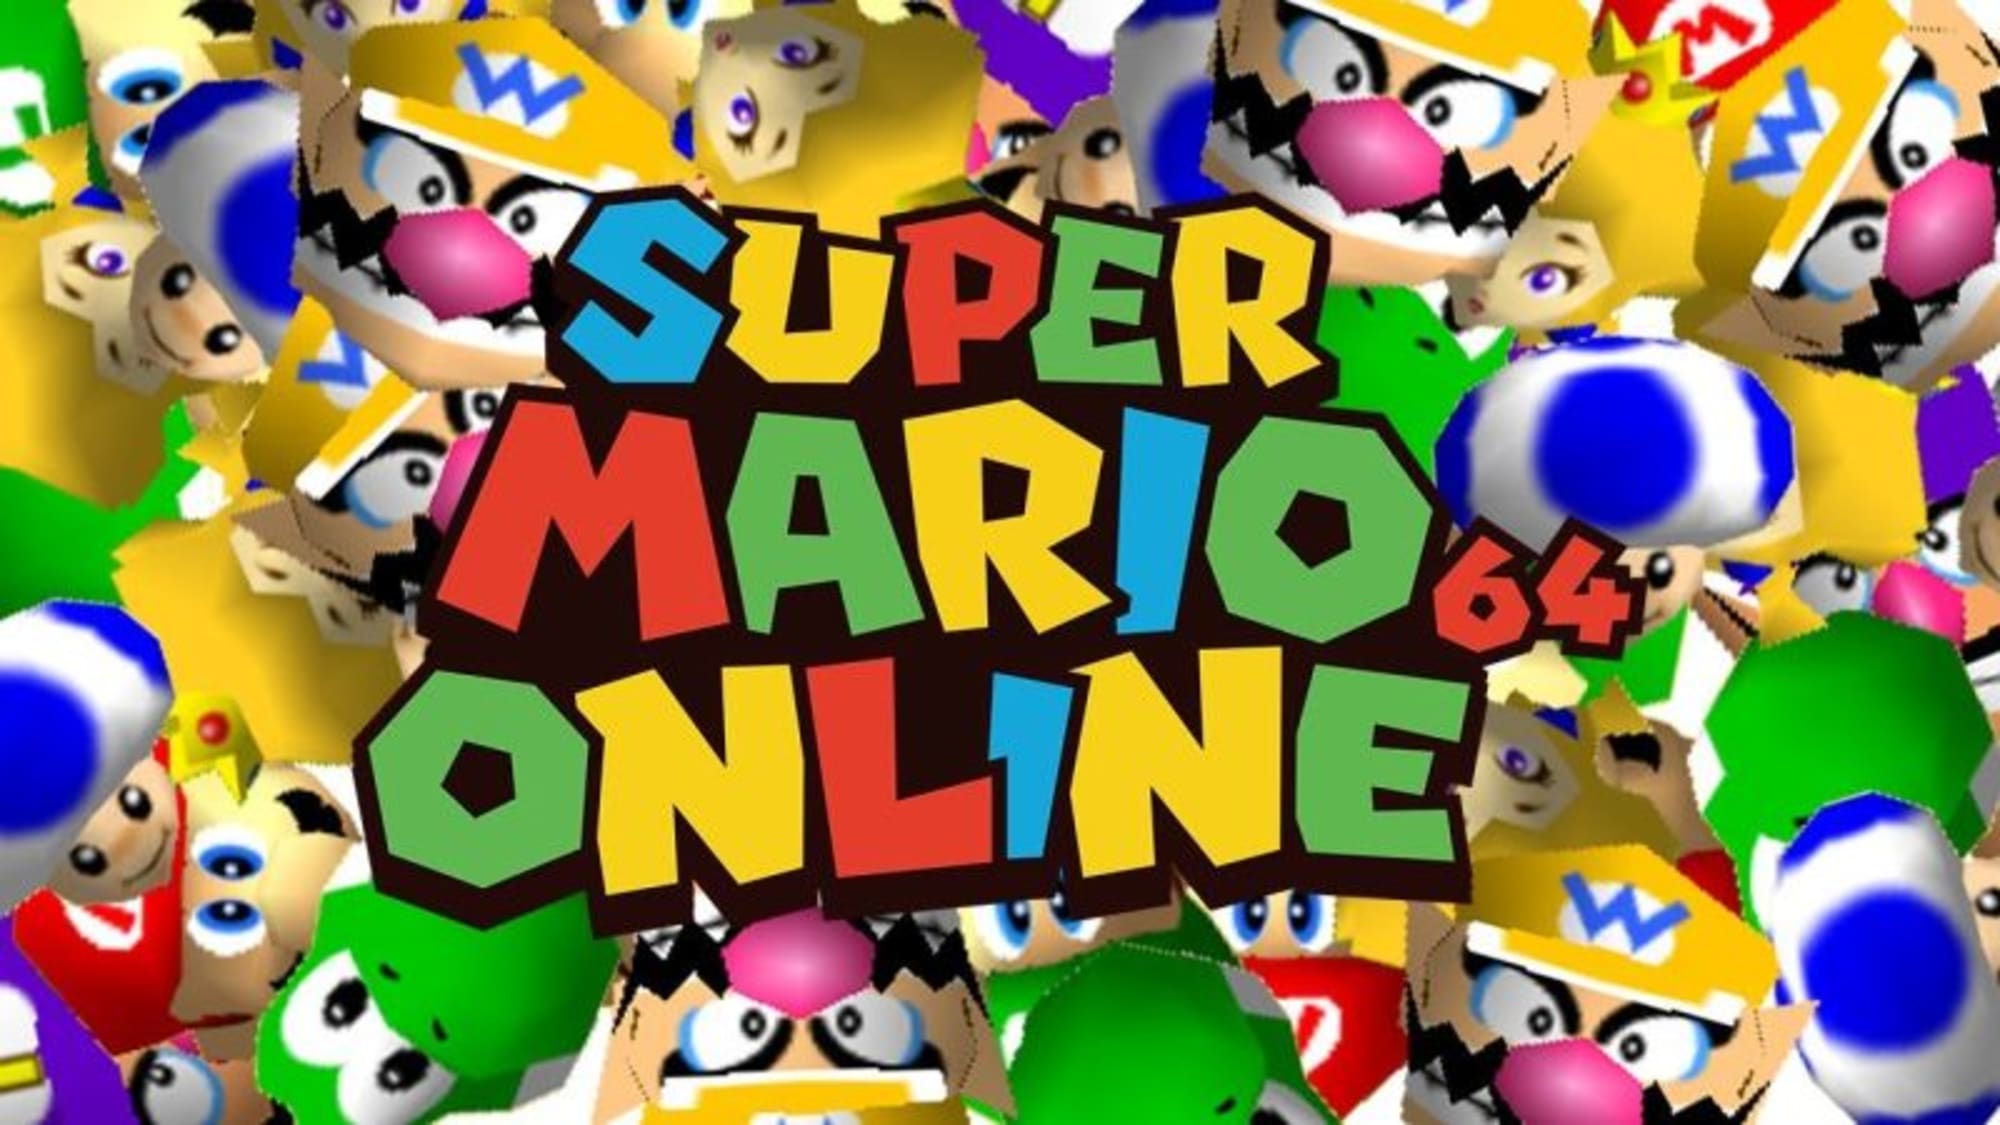 super mario 64 online game over